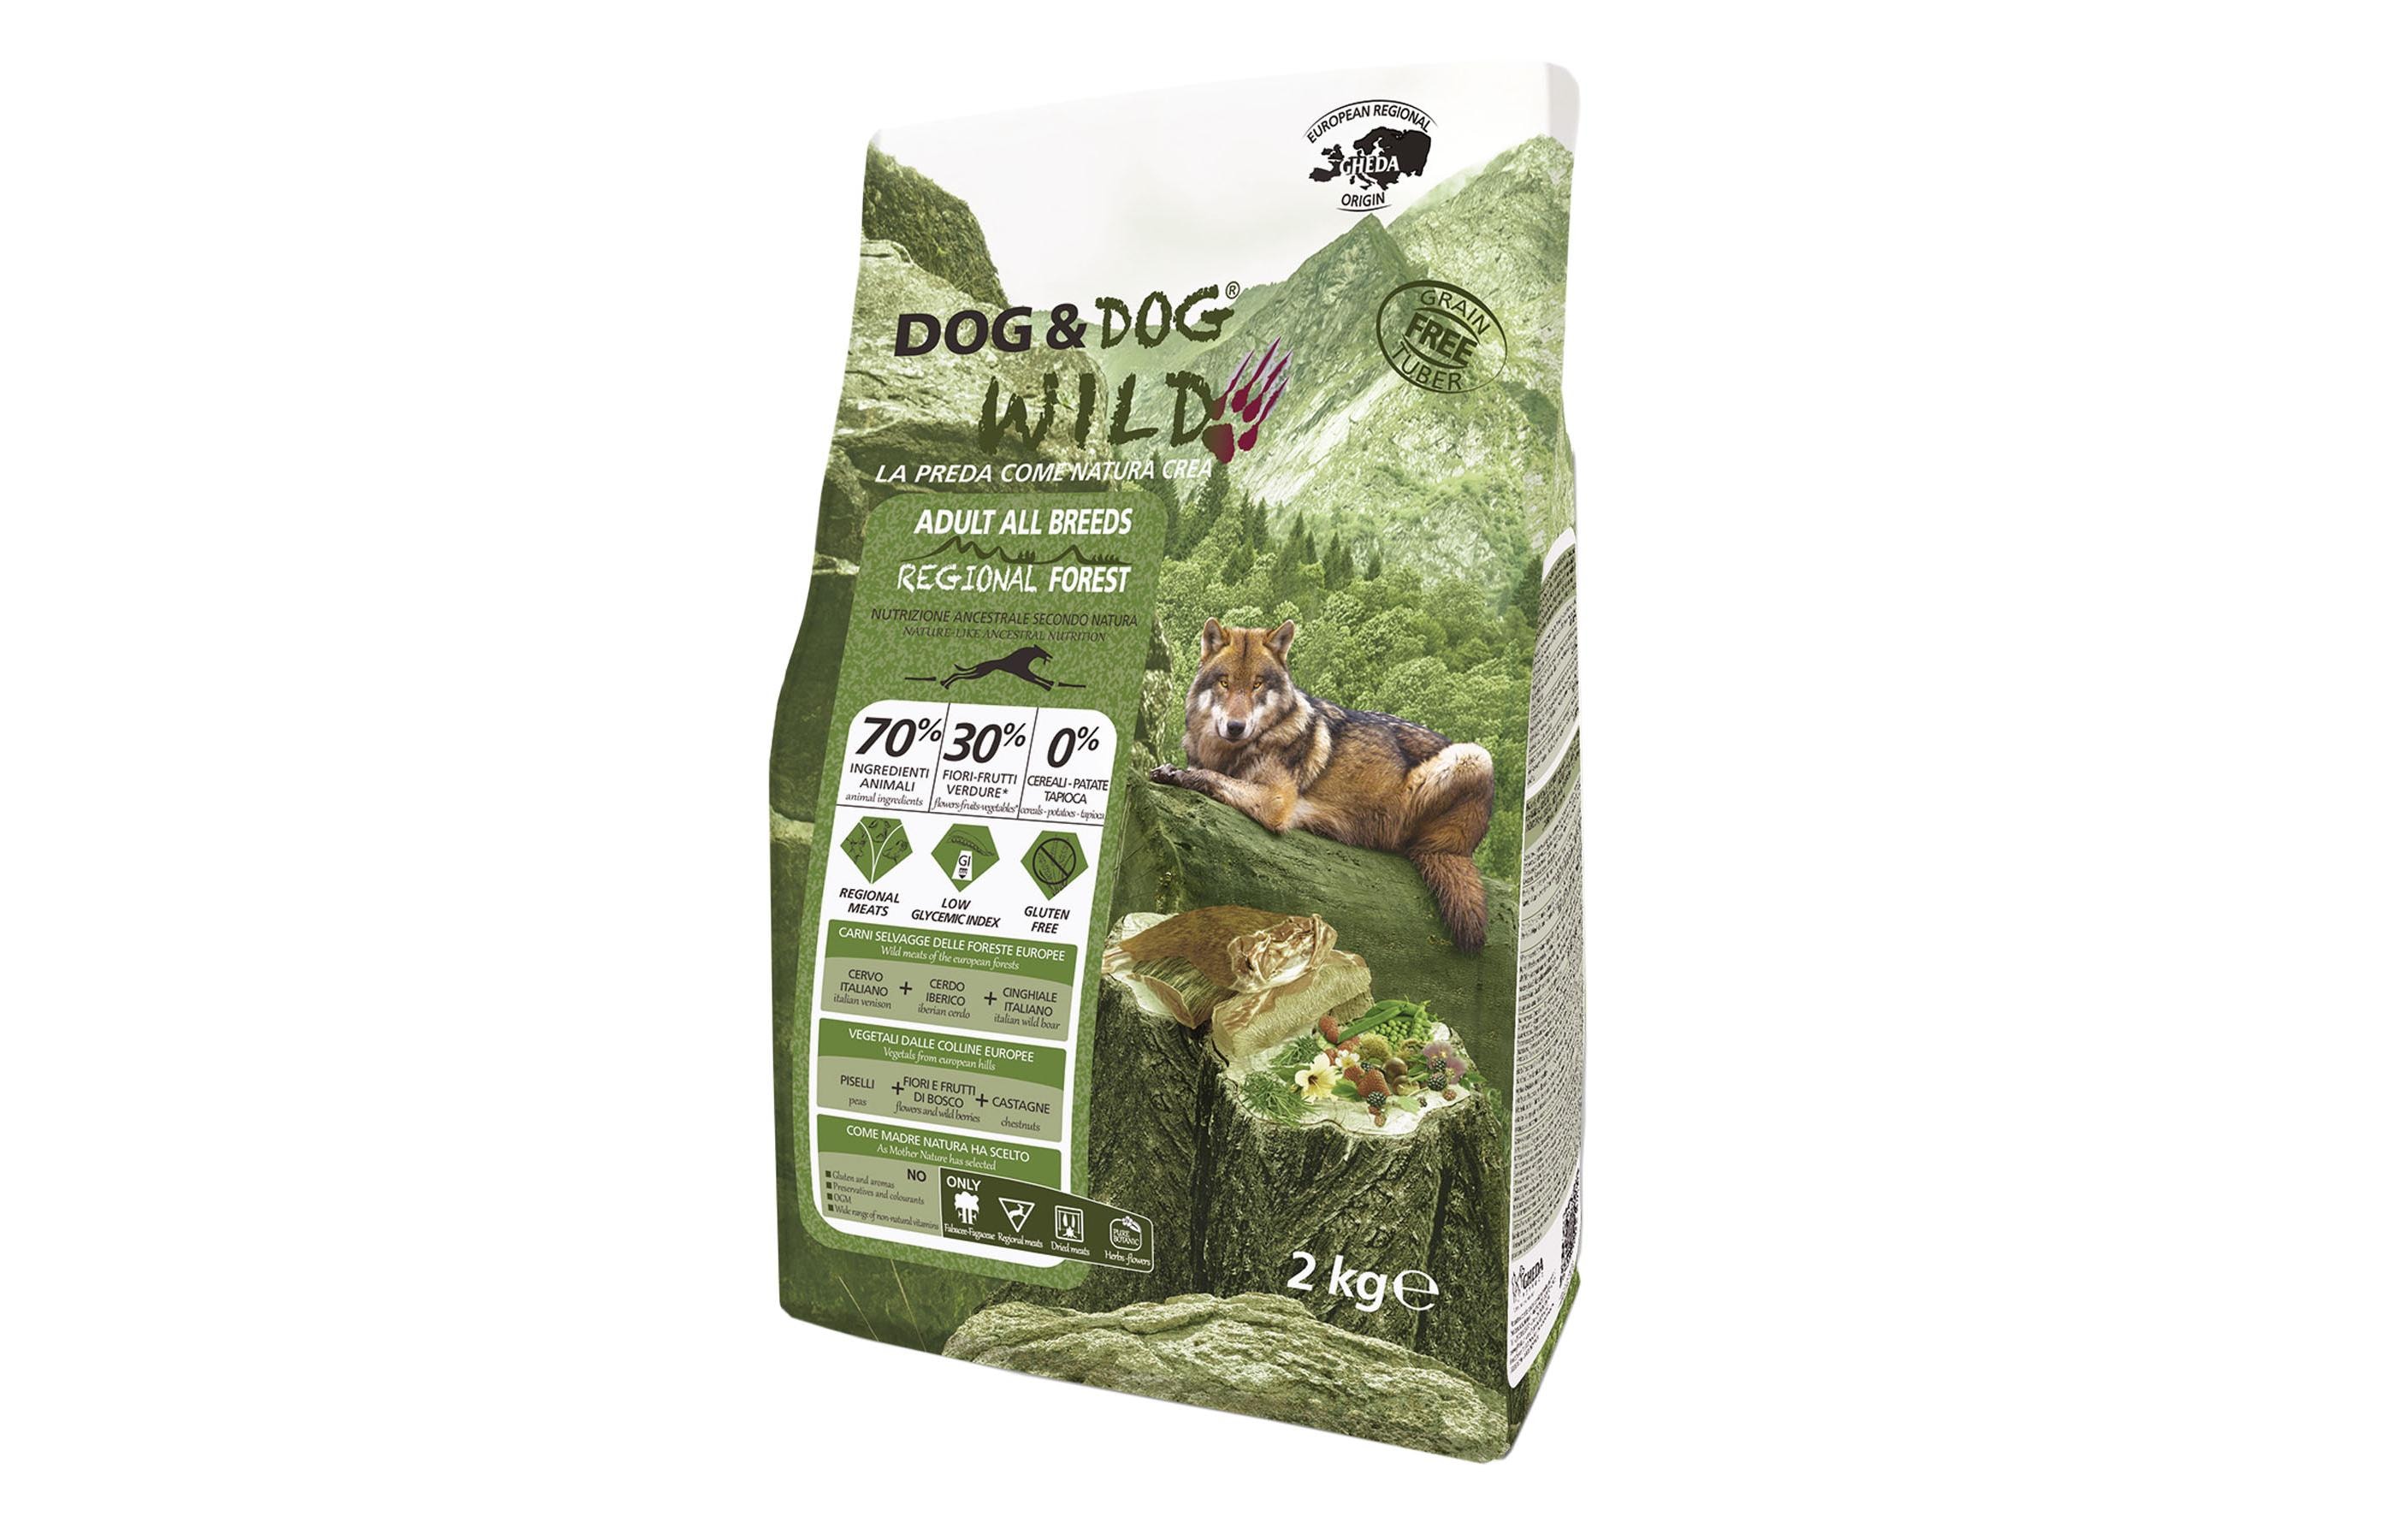 Dog&Dog Trockenfutter Wild Regional Forest, 2 kg